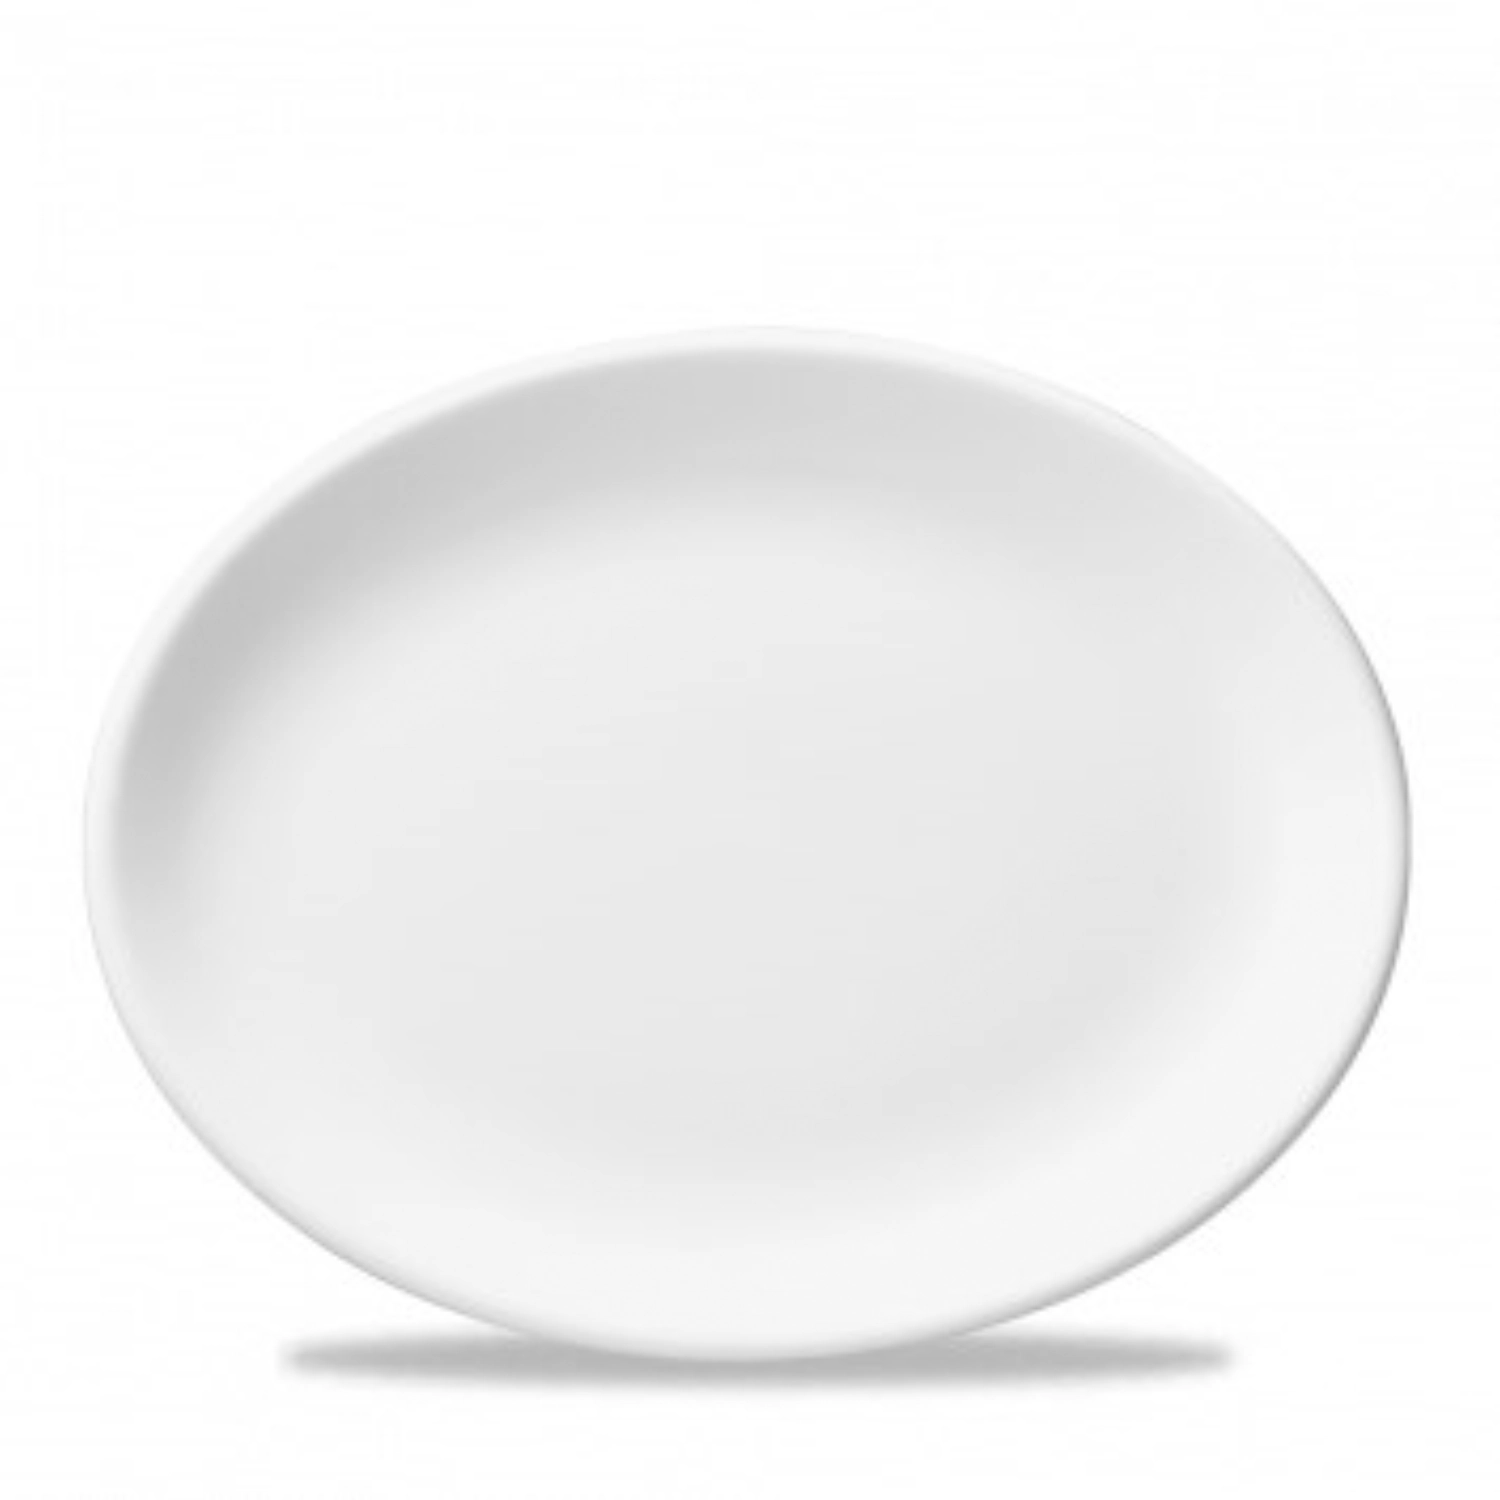 Whiteware White ovaler Teller / Servierplatte